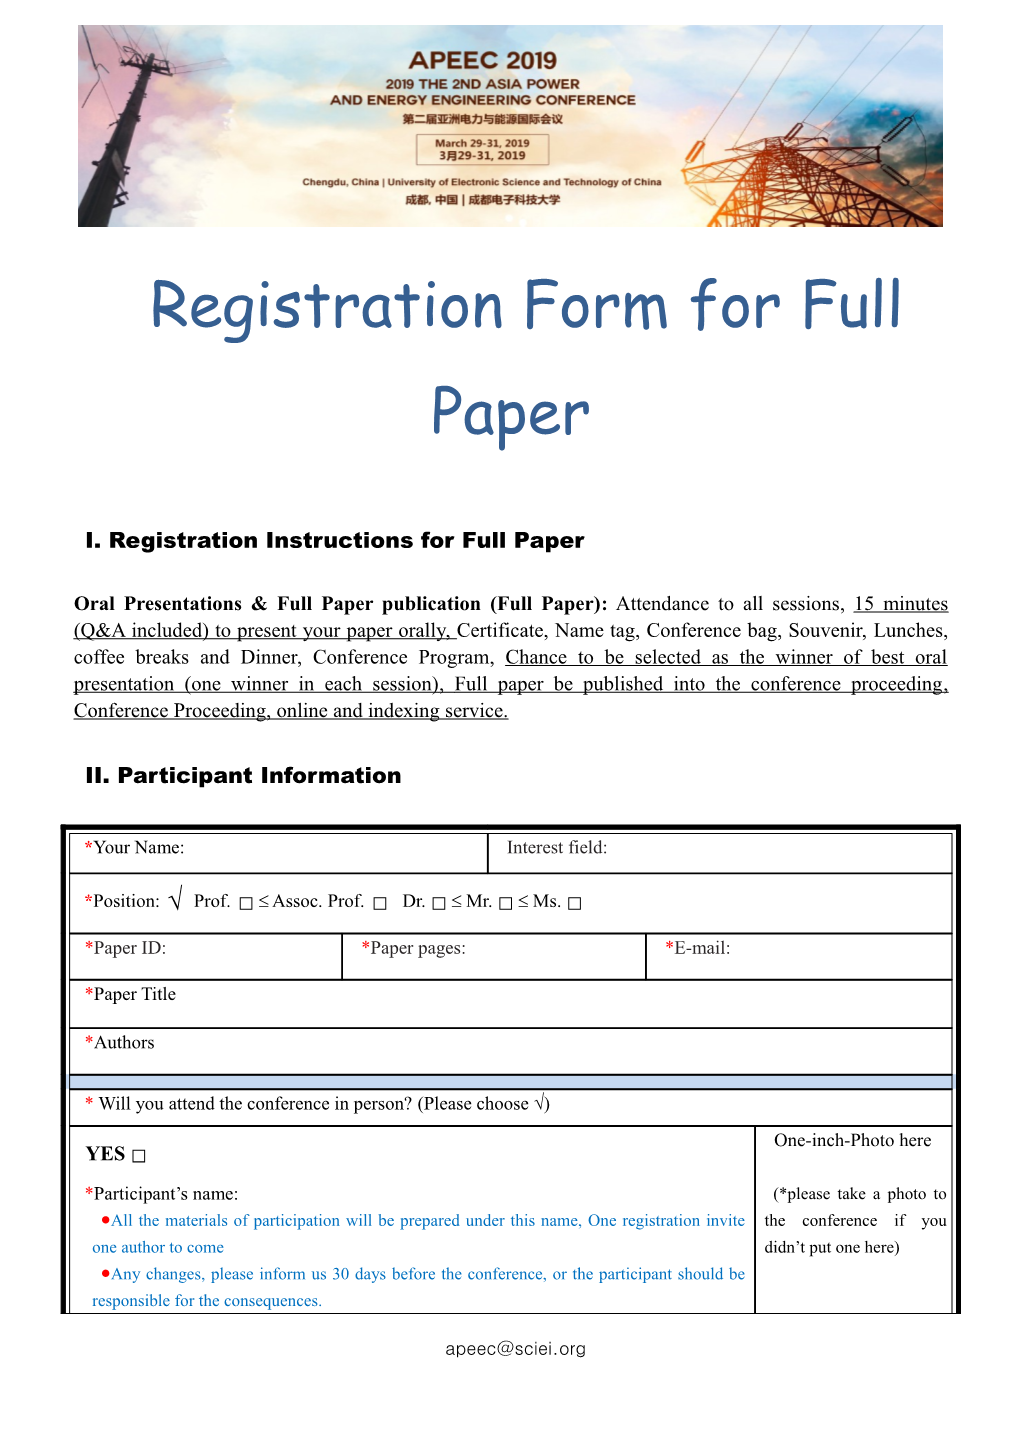 Registration Form for Full Paper